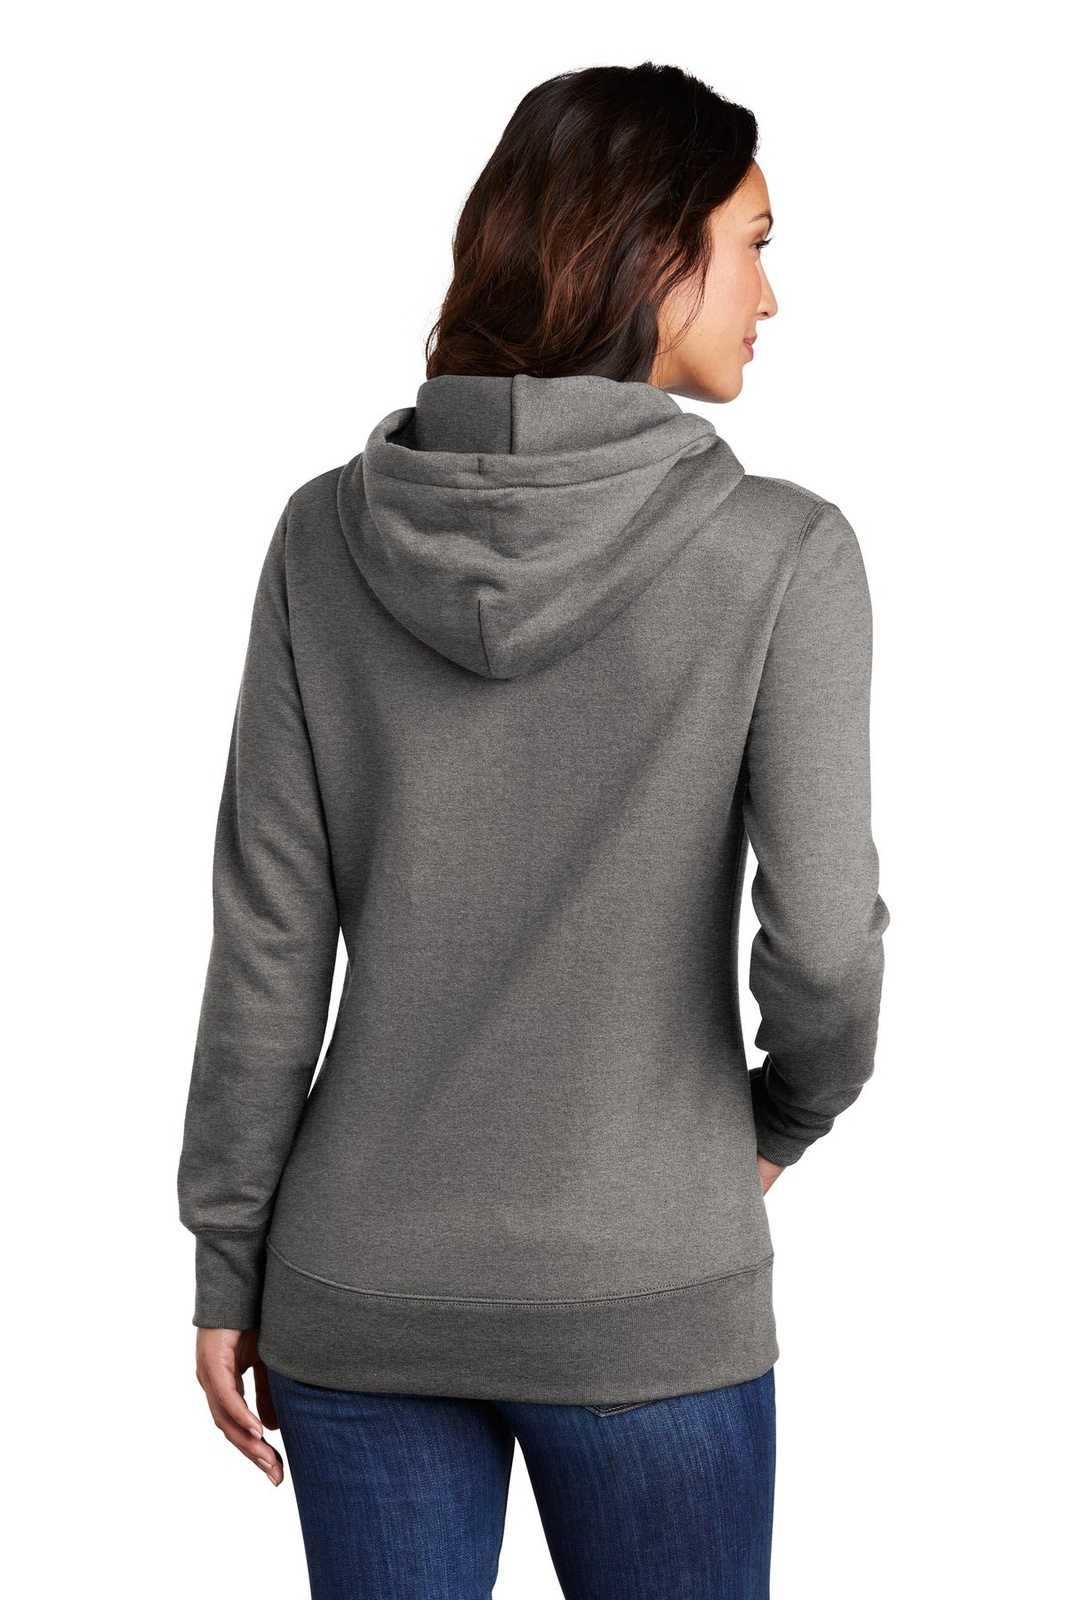 Port & Company LPC78H Ladies Core Fleece Pullover Hooded Sweatshirt - Graphite Heather - HIT a Double - 1